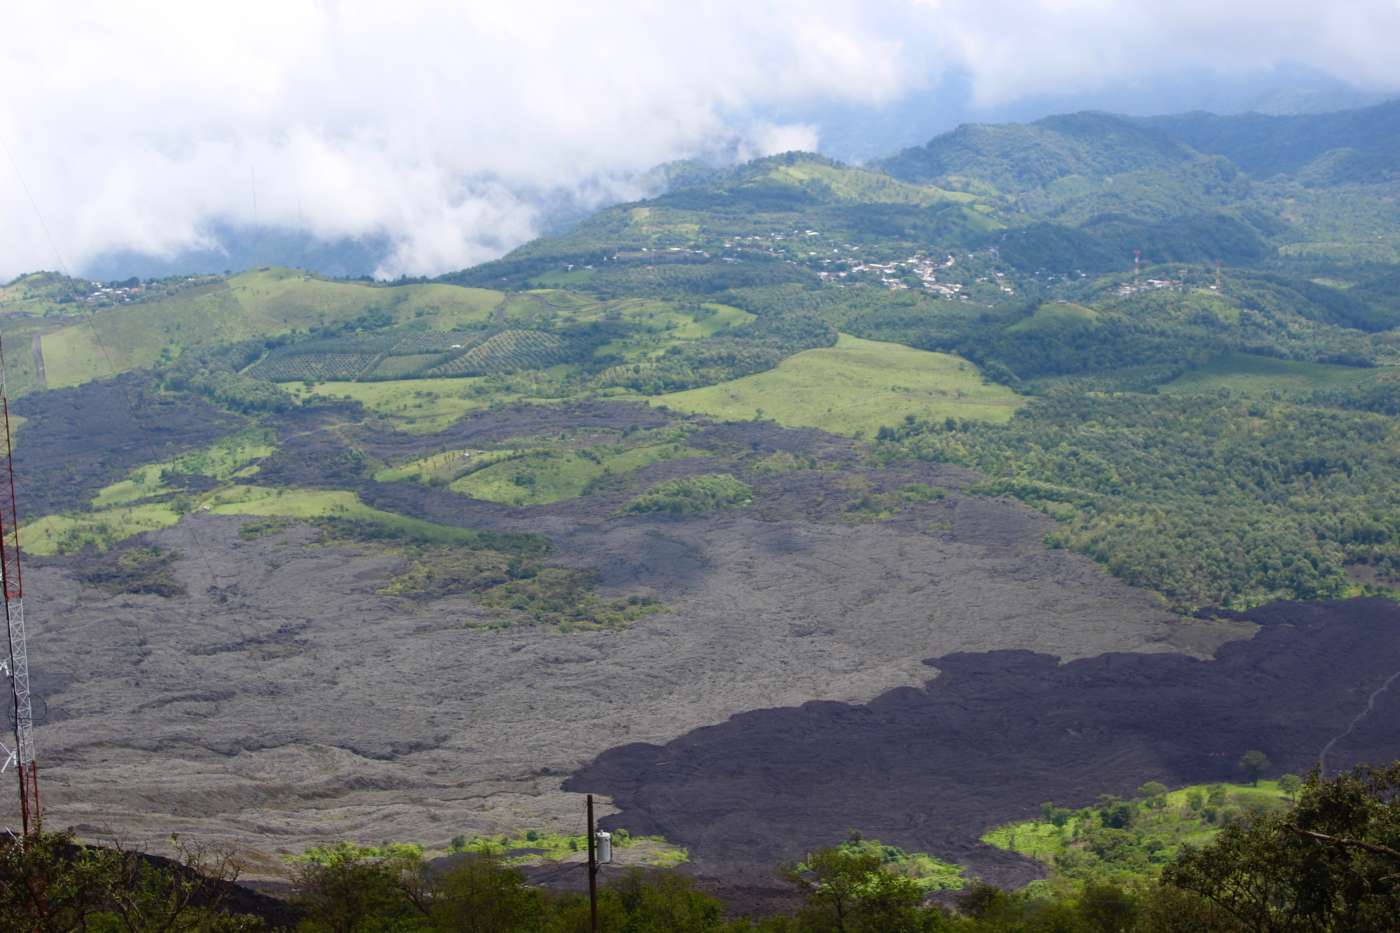 http://adventureguatemala.com/pacaya-volcano/